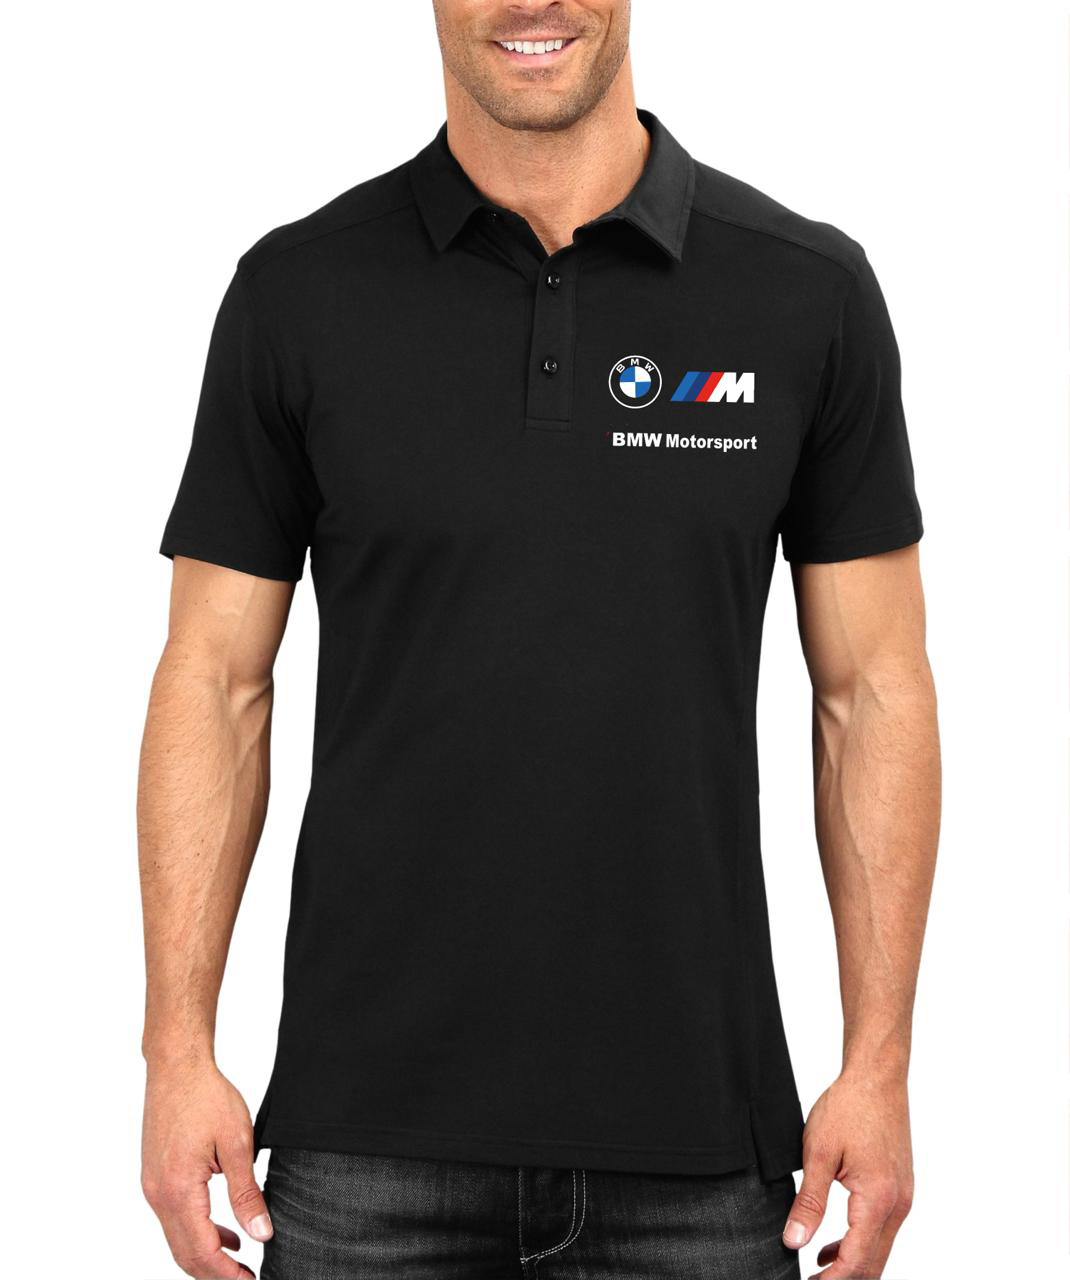 Motorsport Polo T-Shirt - Supreme Shirts